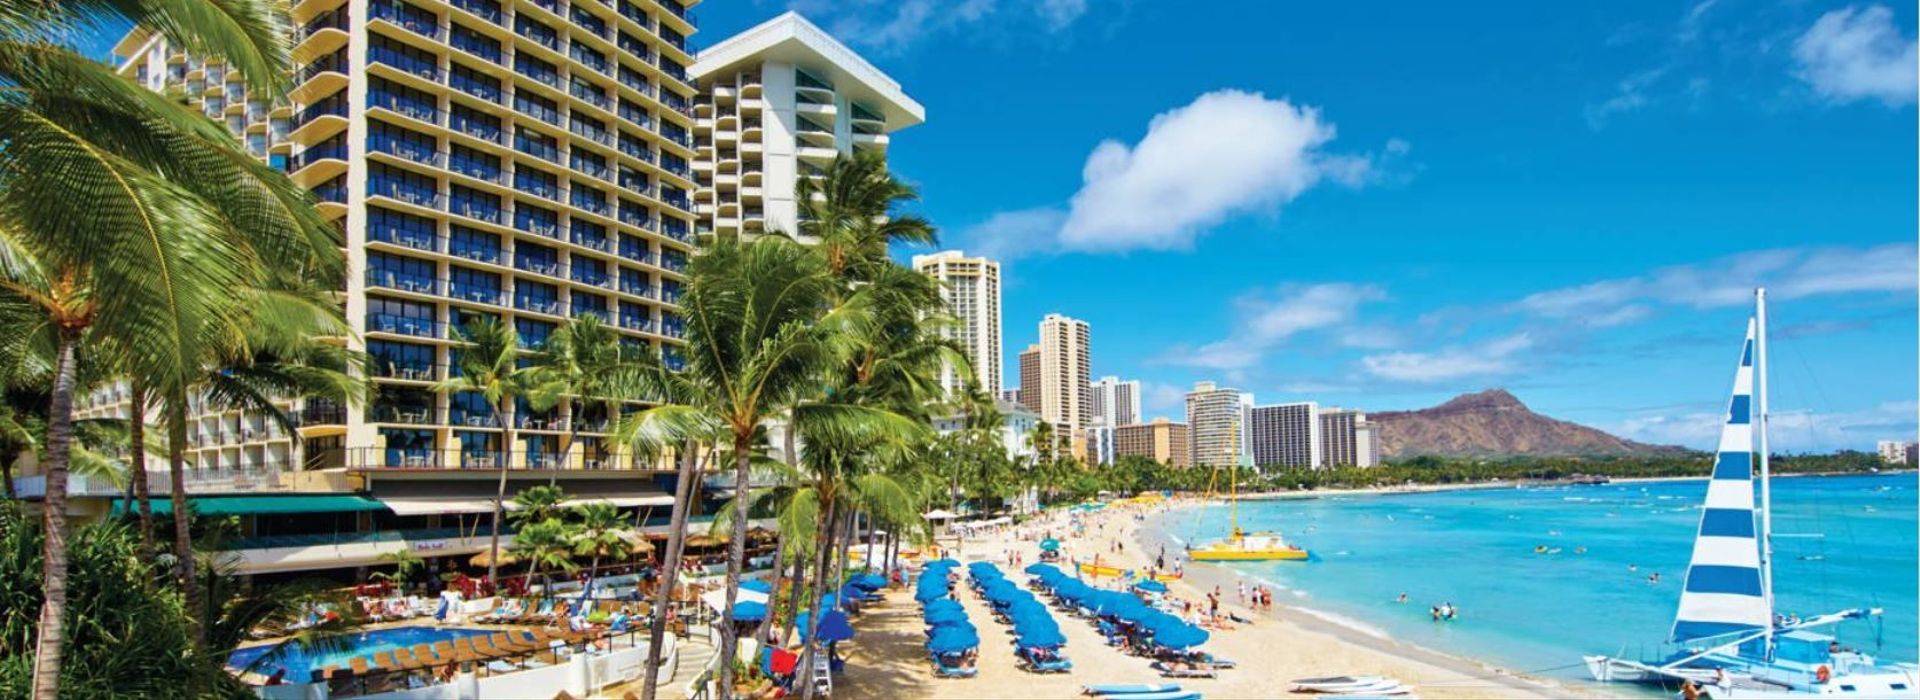 Outrigger Waikiki Beach Resort header image.JPG